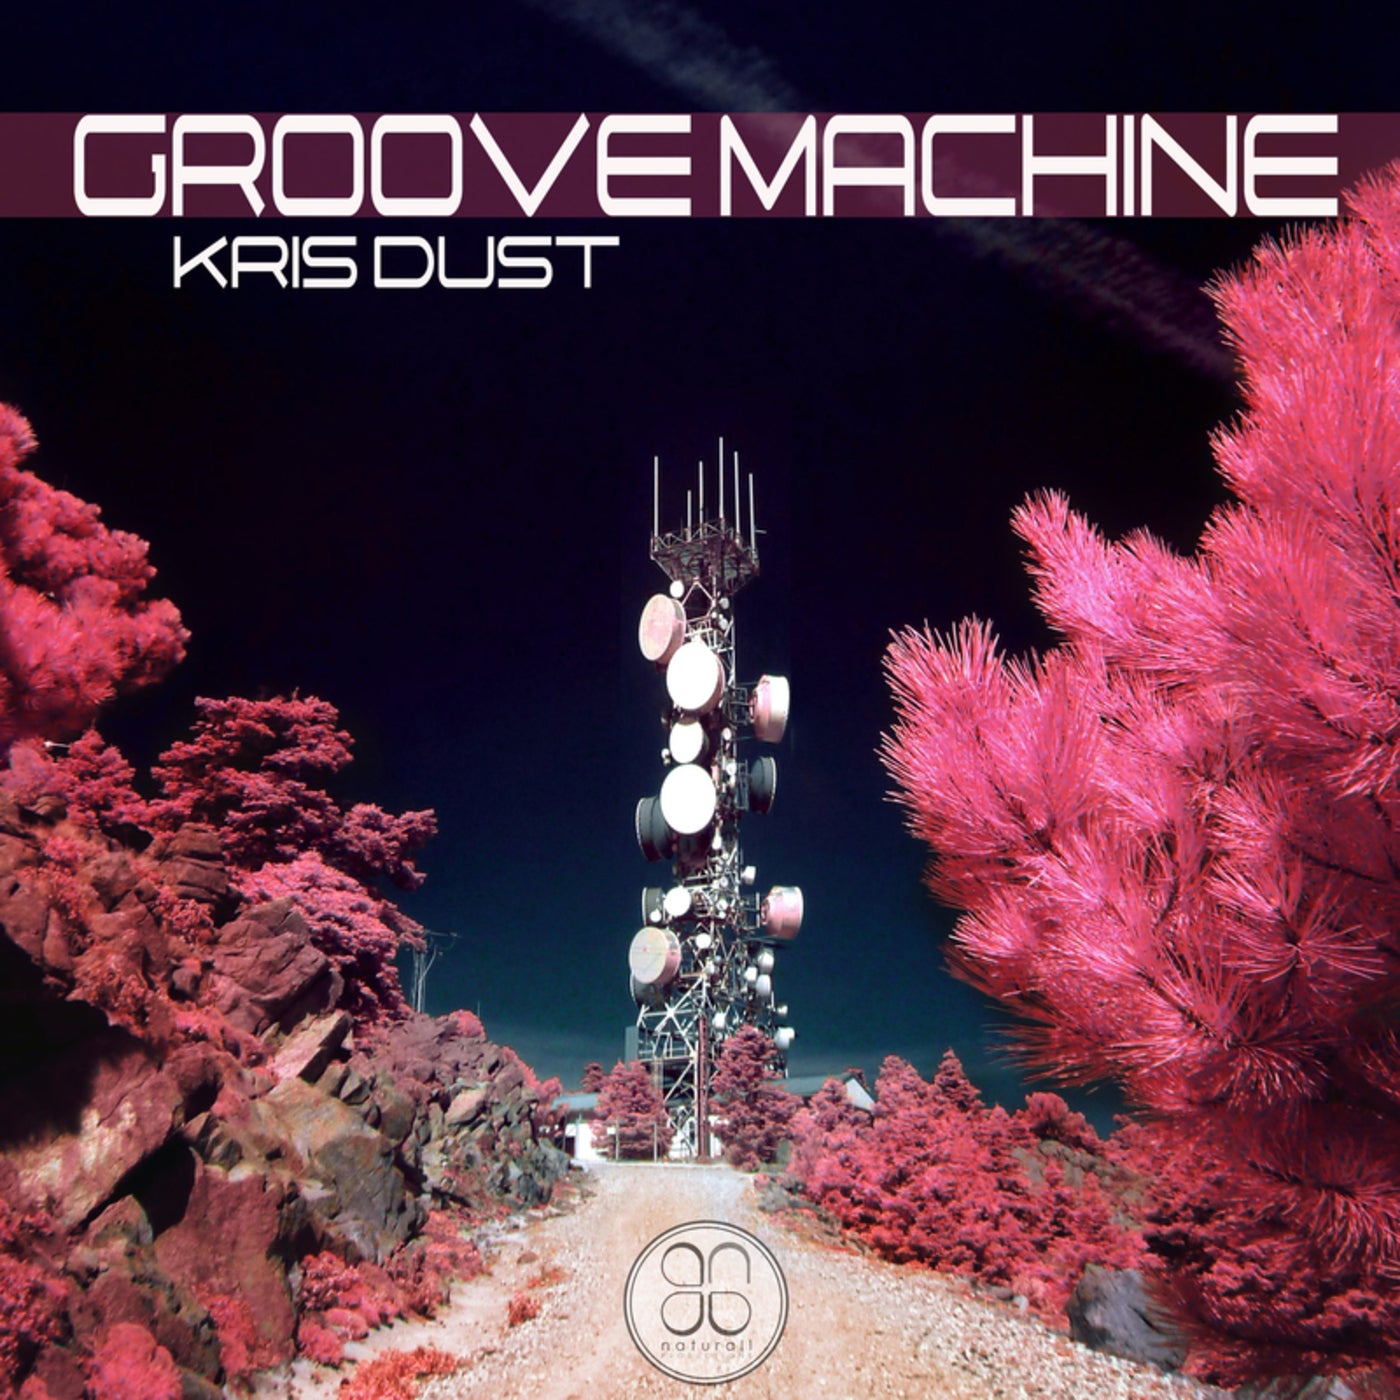 Groove Machine